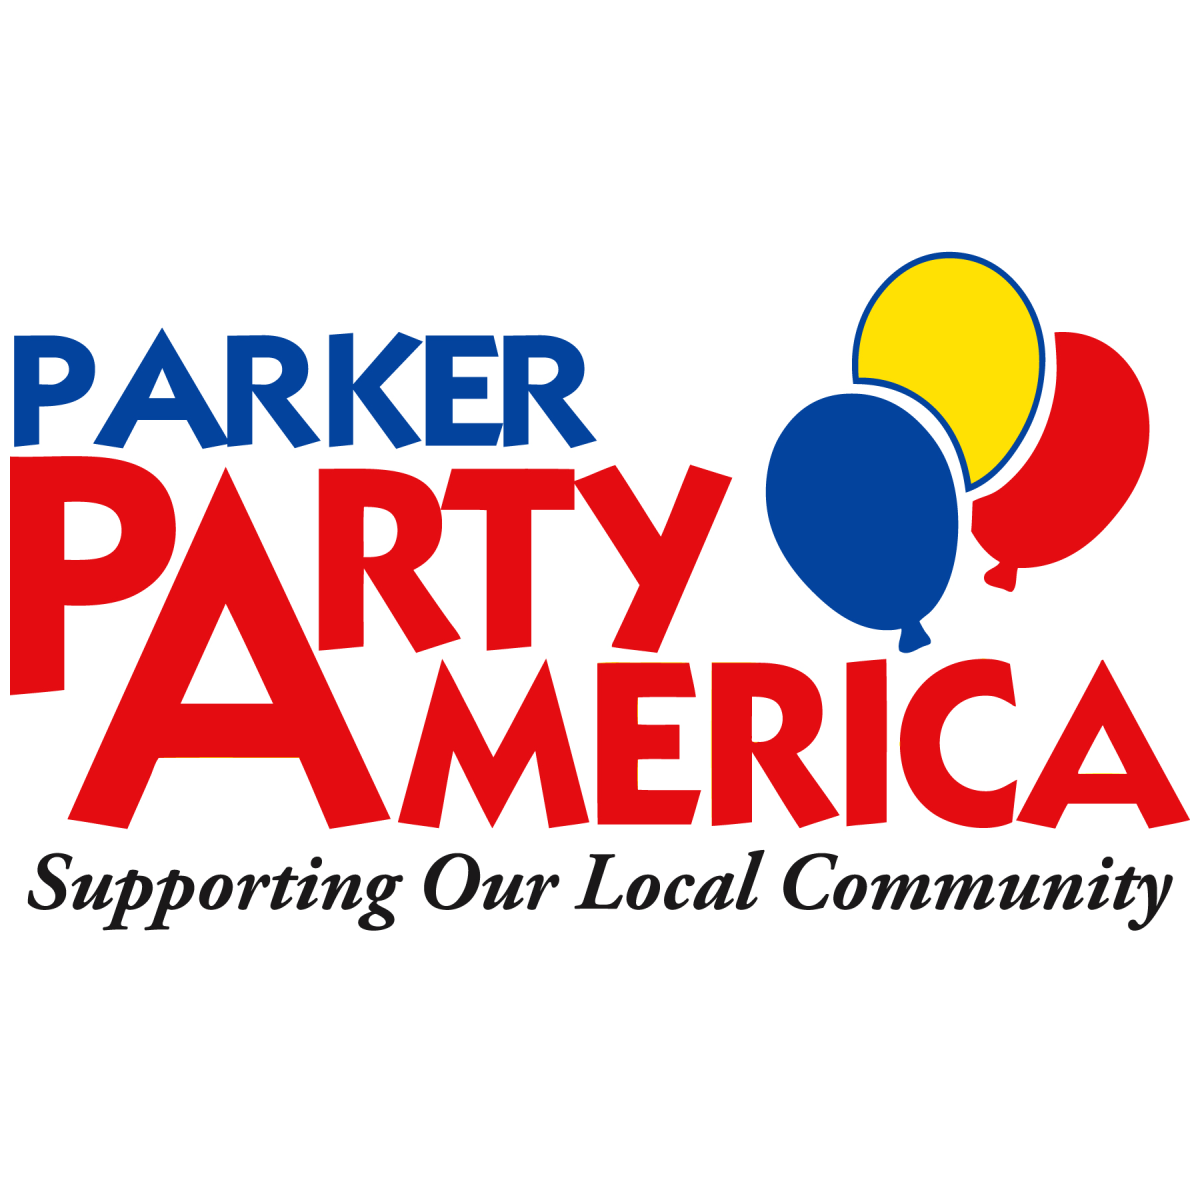 Parker Party America logo